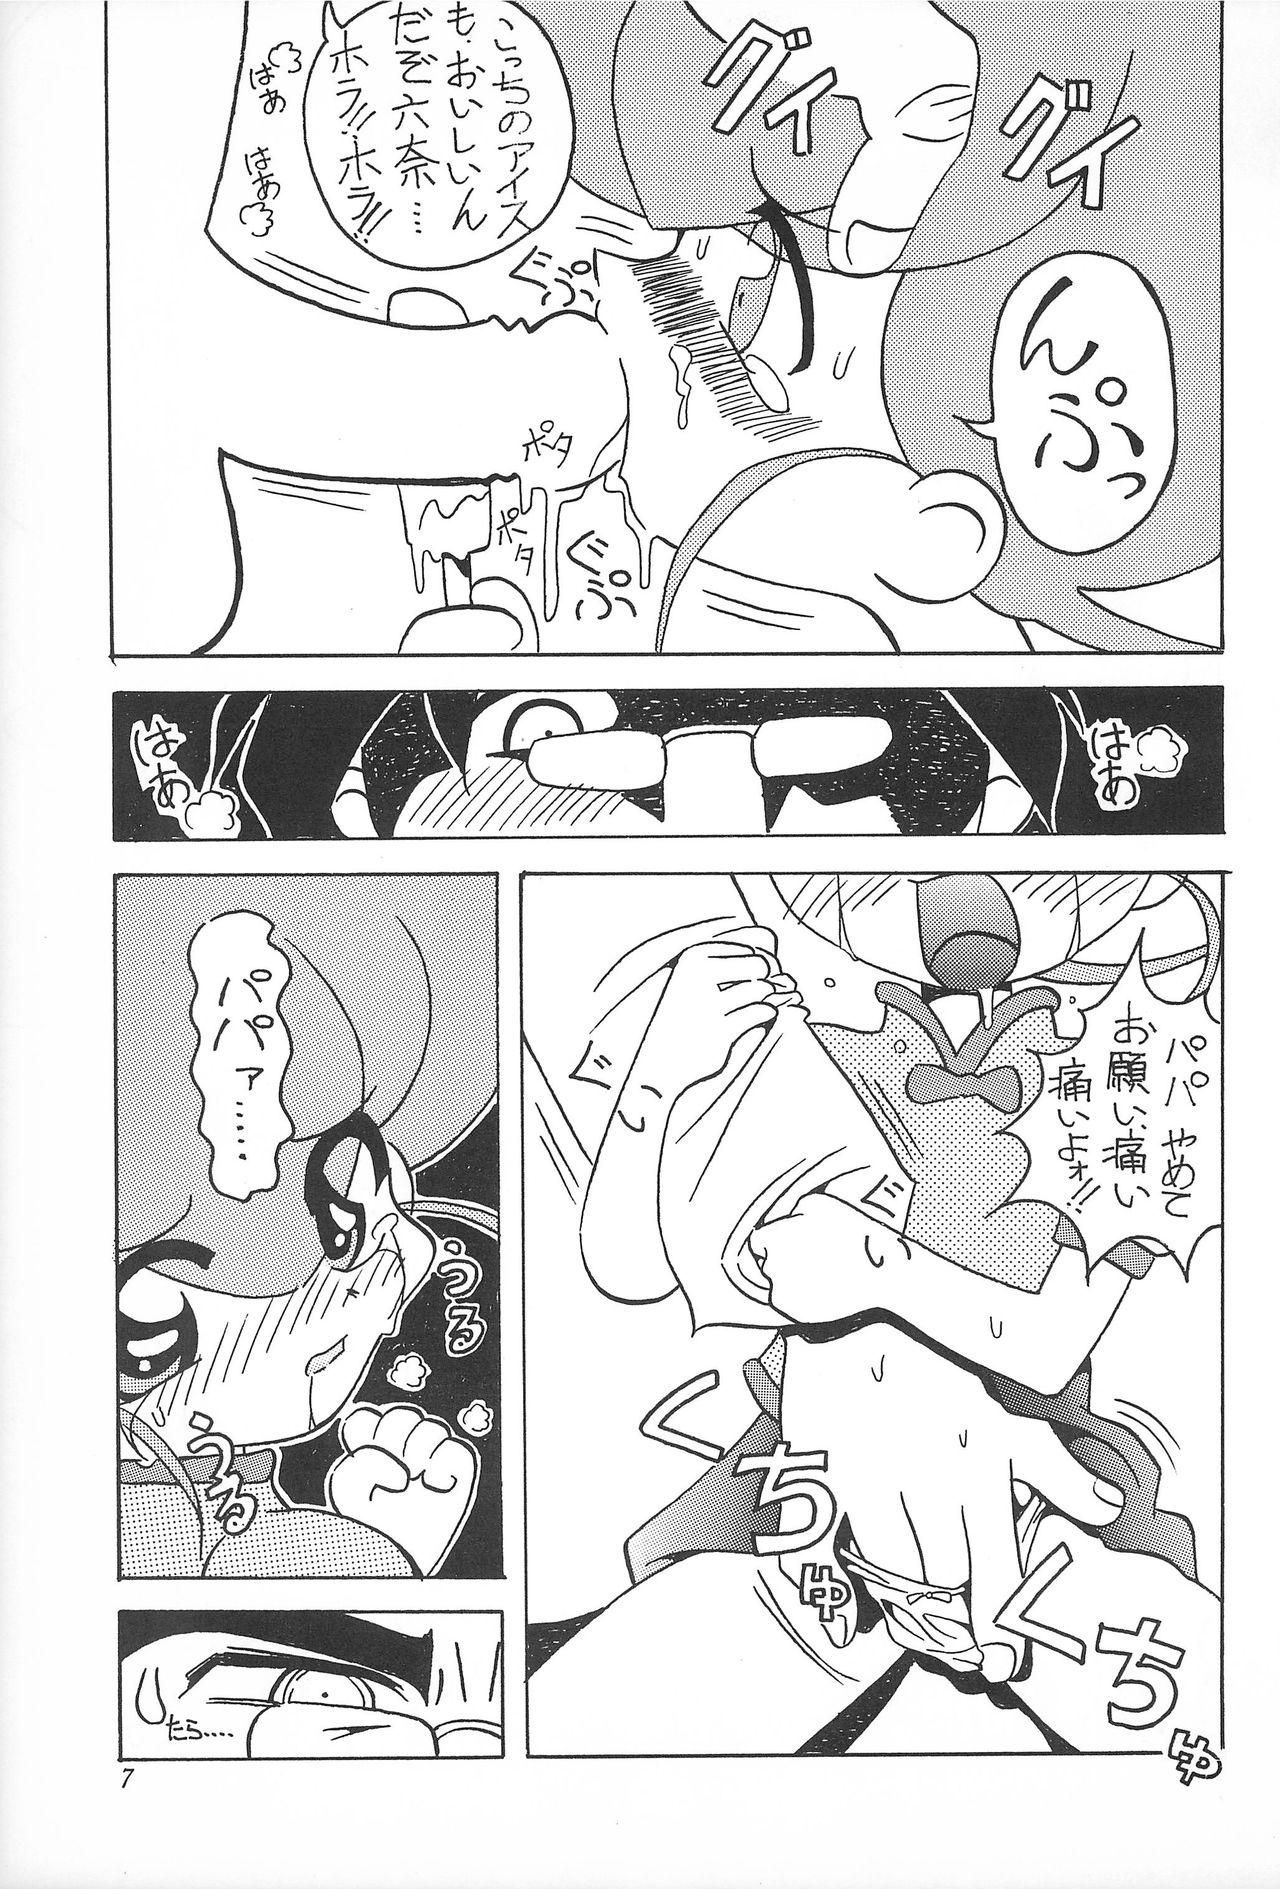 Punk Rokushin Gattai - Magewappa 13 - Mon colle knights Orgasmus - Page 8